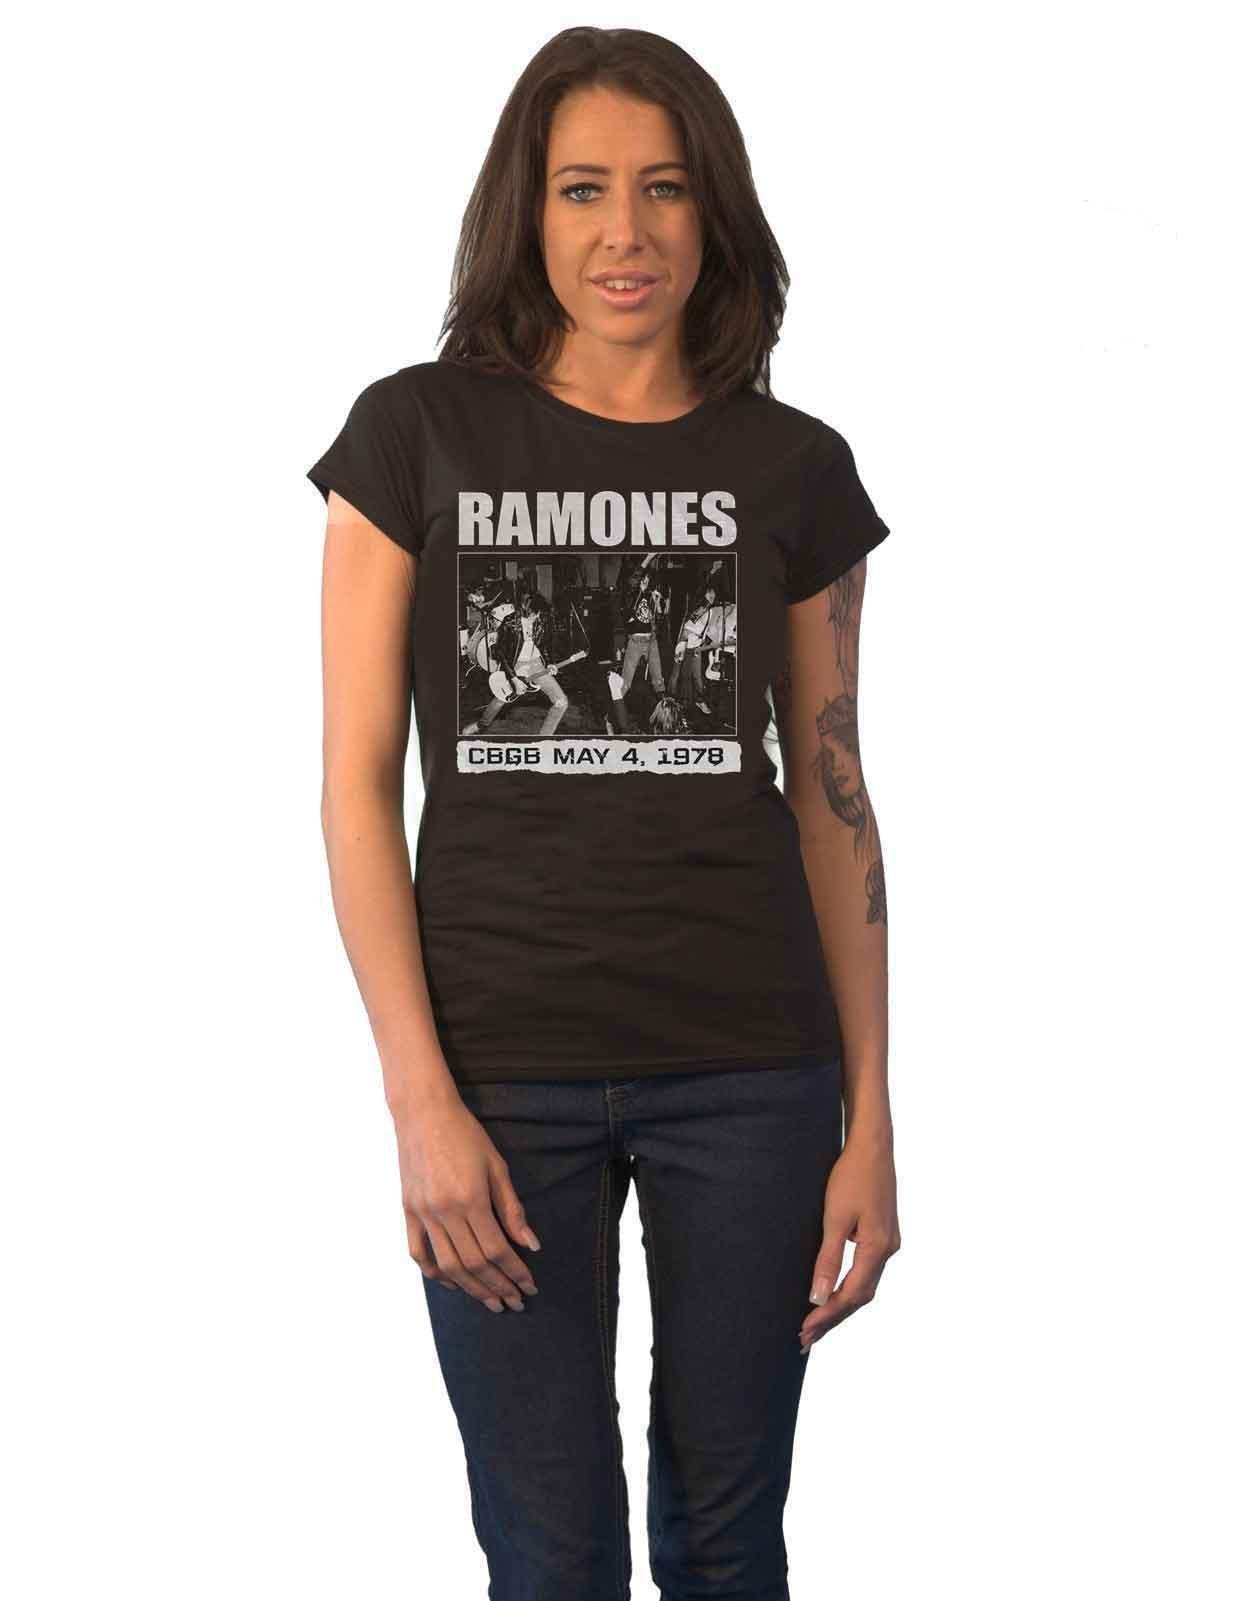 officially licensed cbgb Футболка скинни CBGB 1978 года Ramones, черный